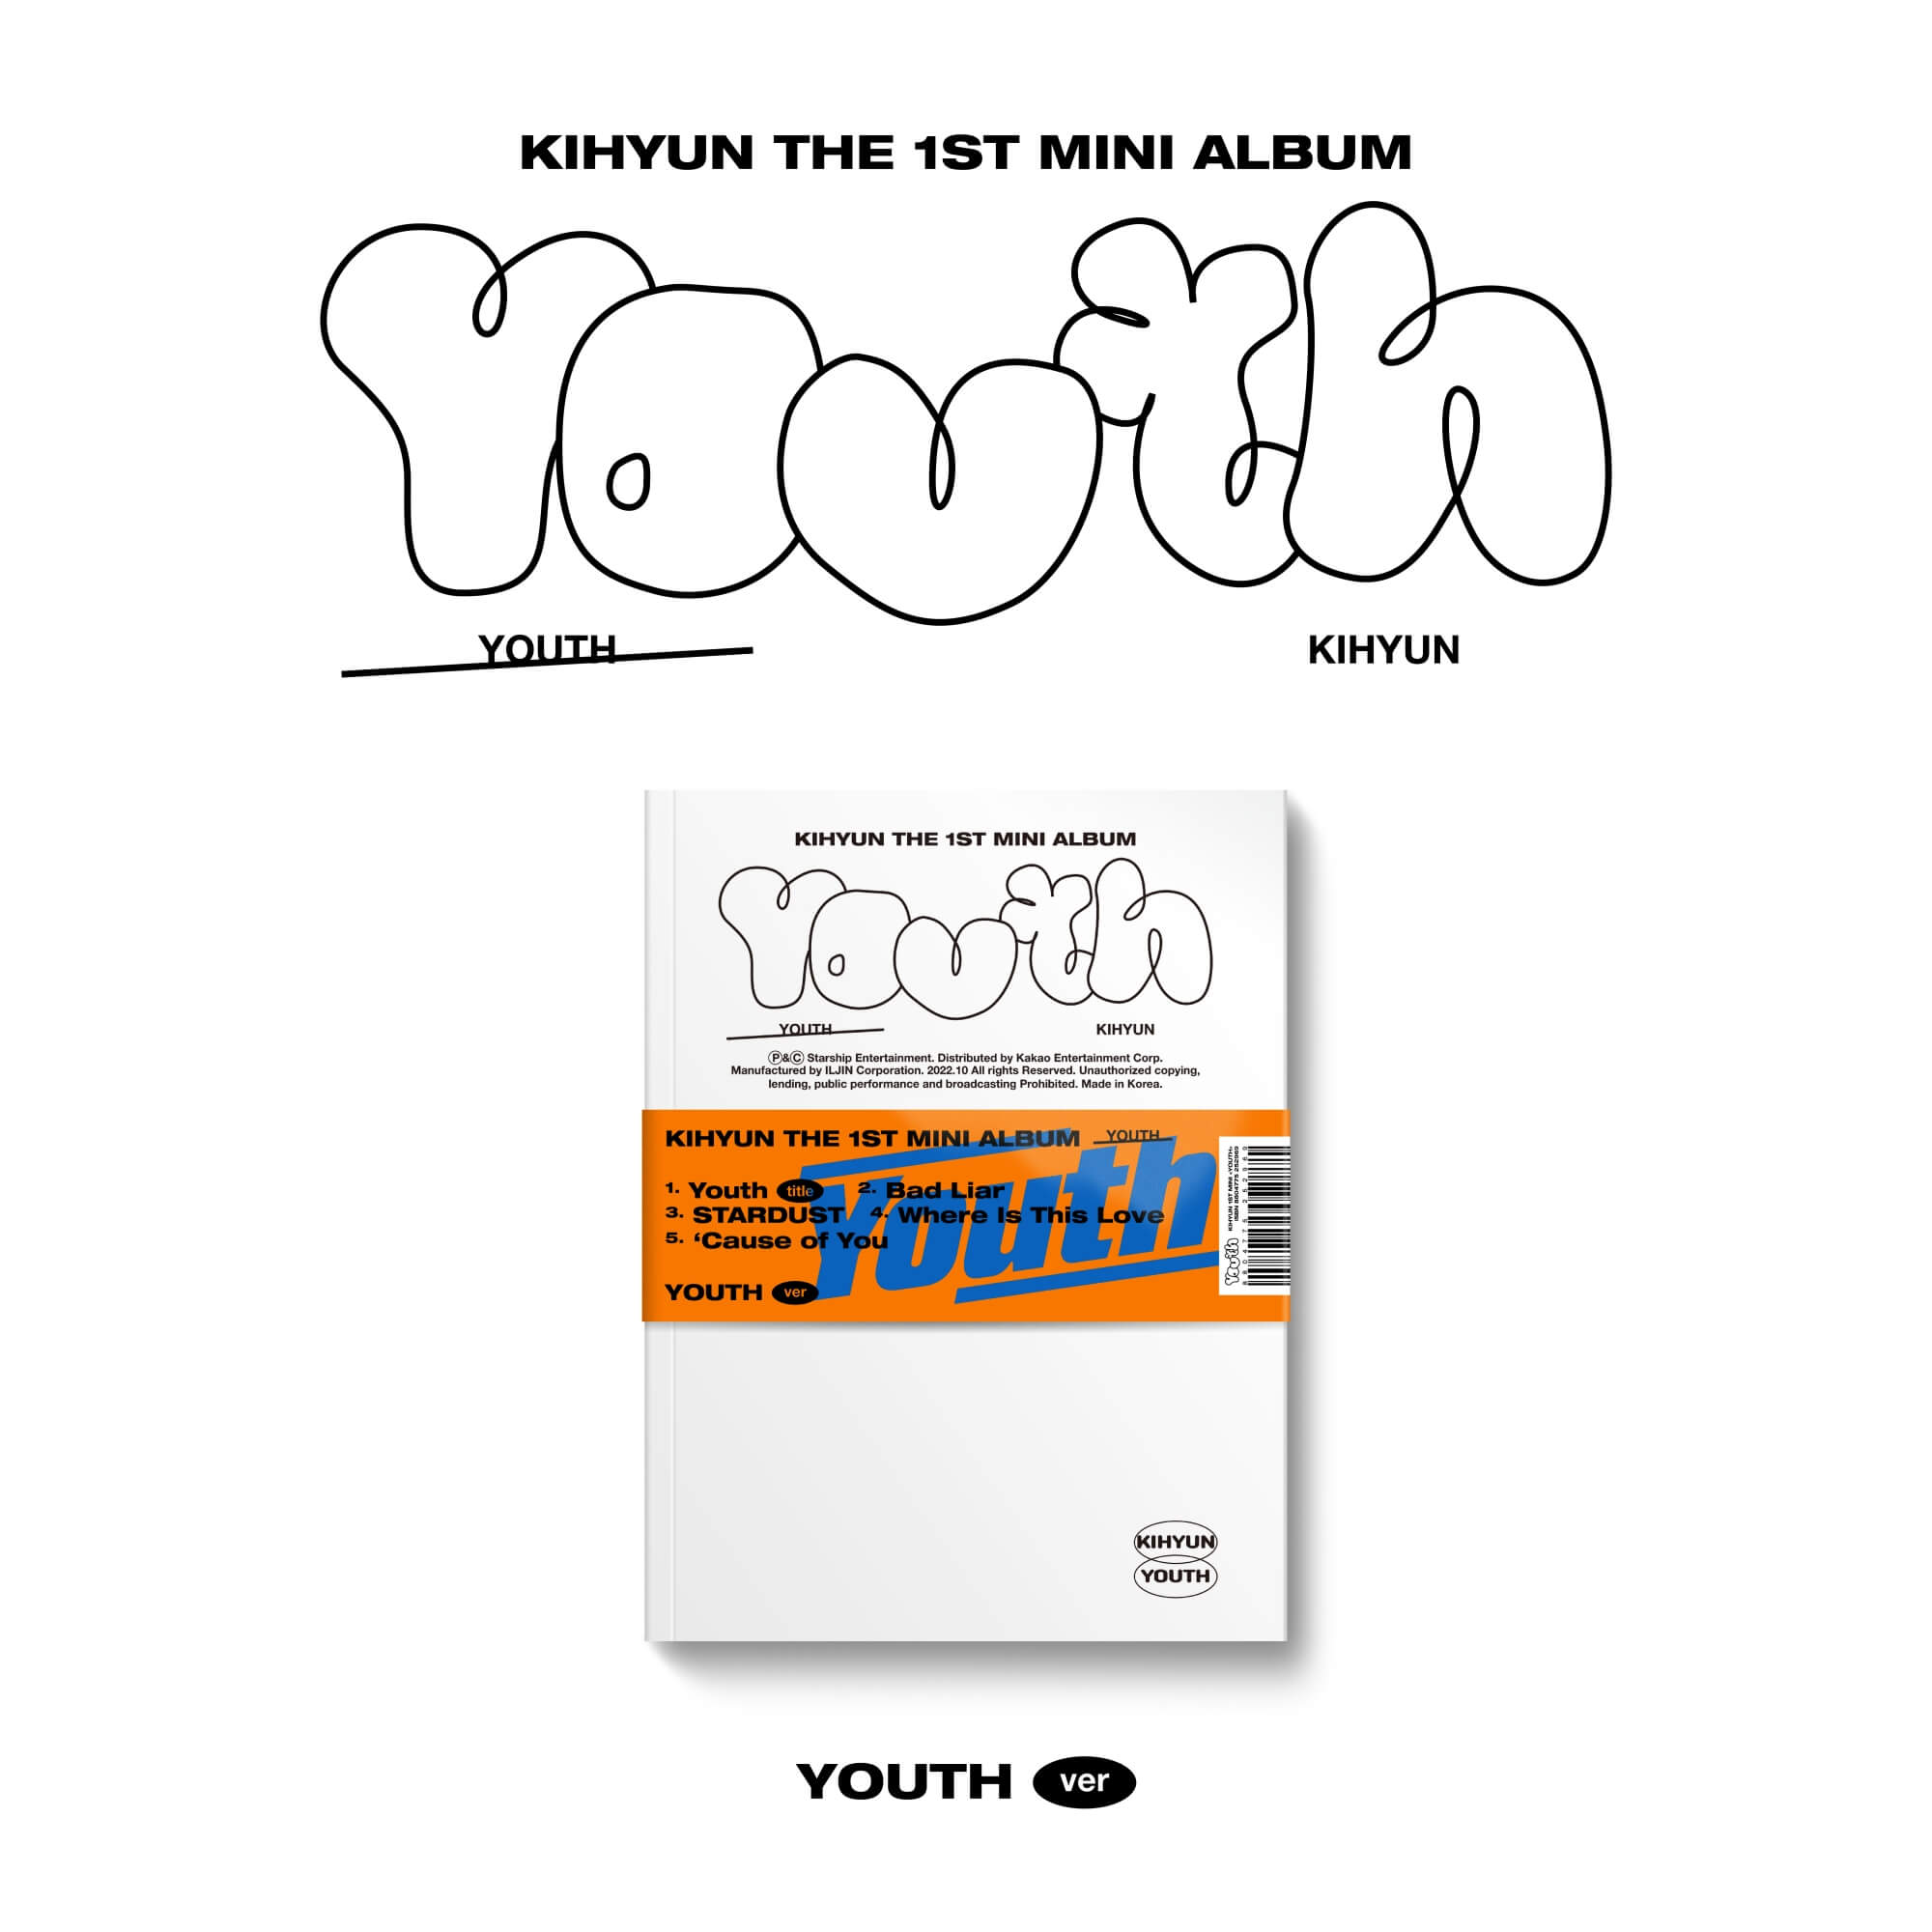 Kihyun 1st Mini Album YOUTH - YOUTH Version